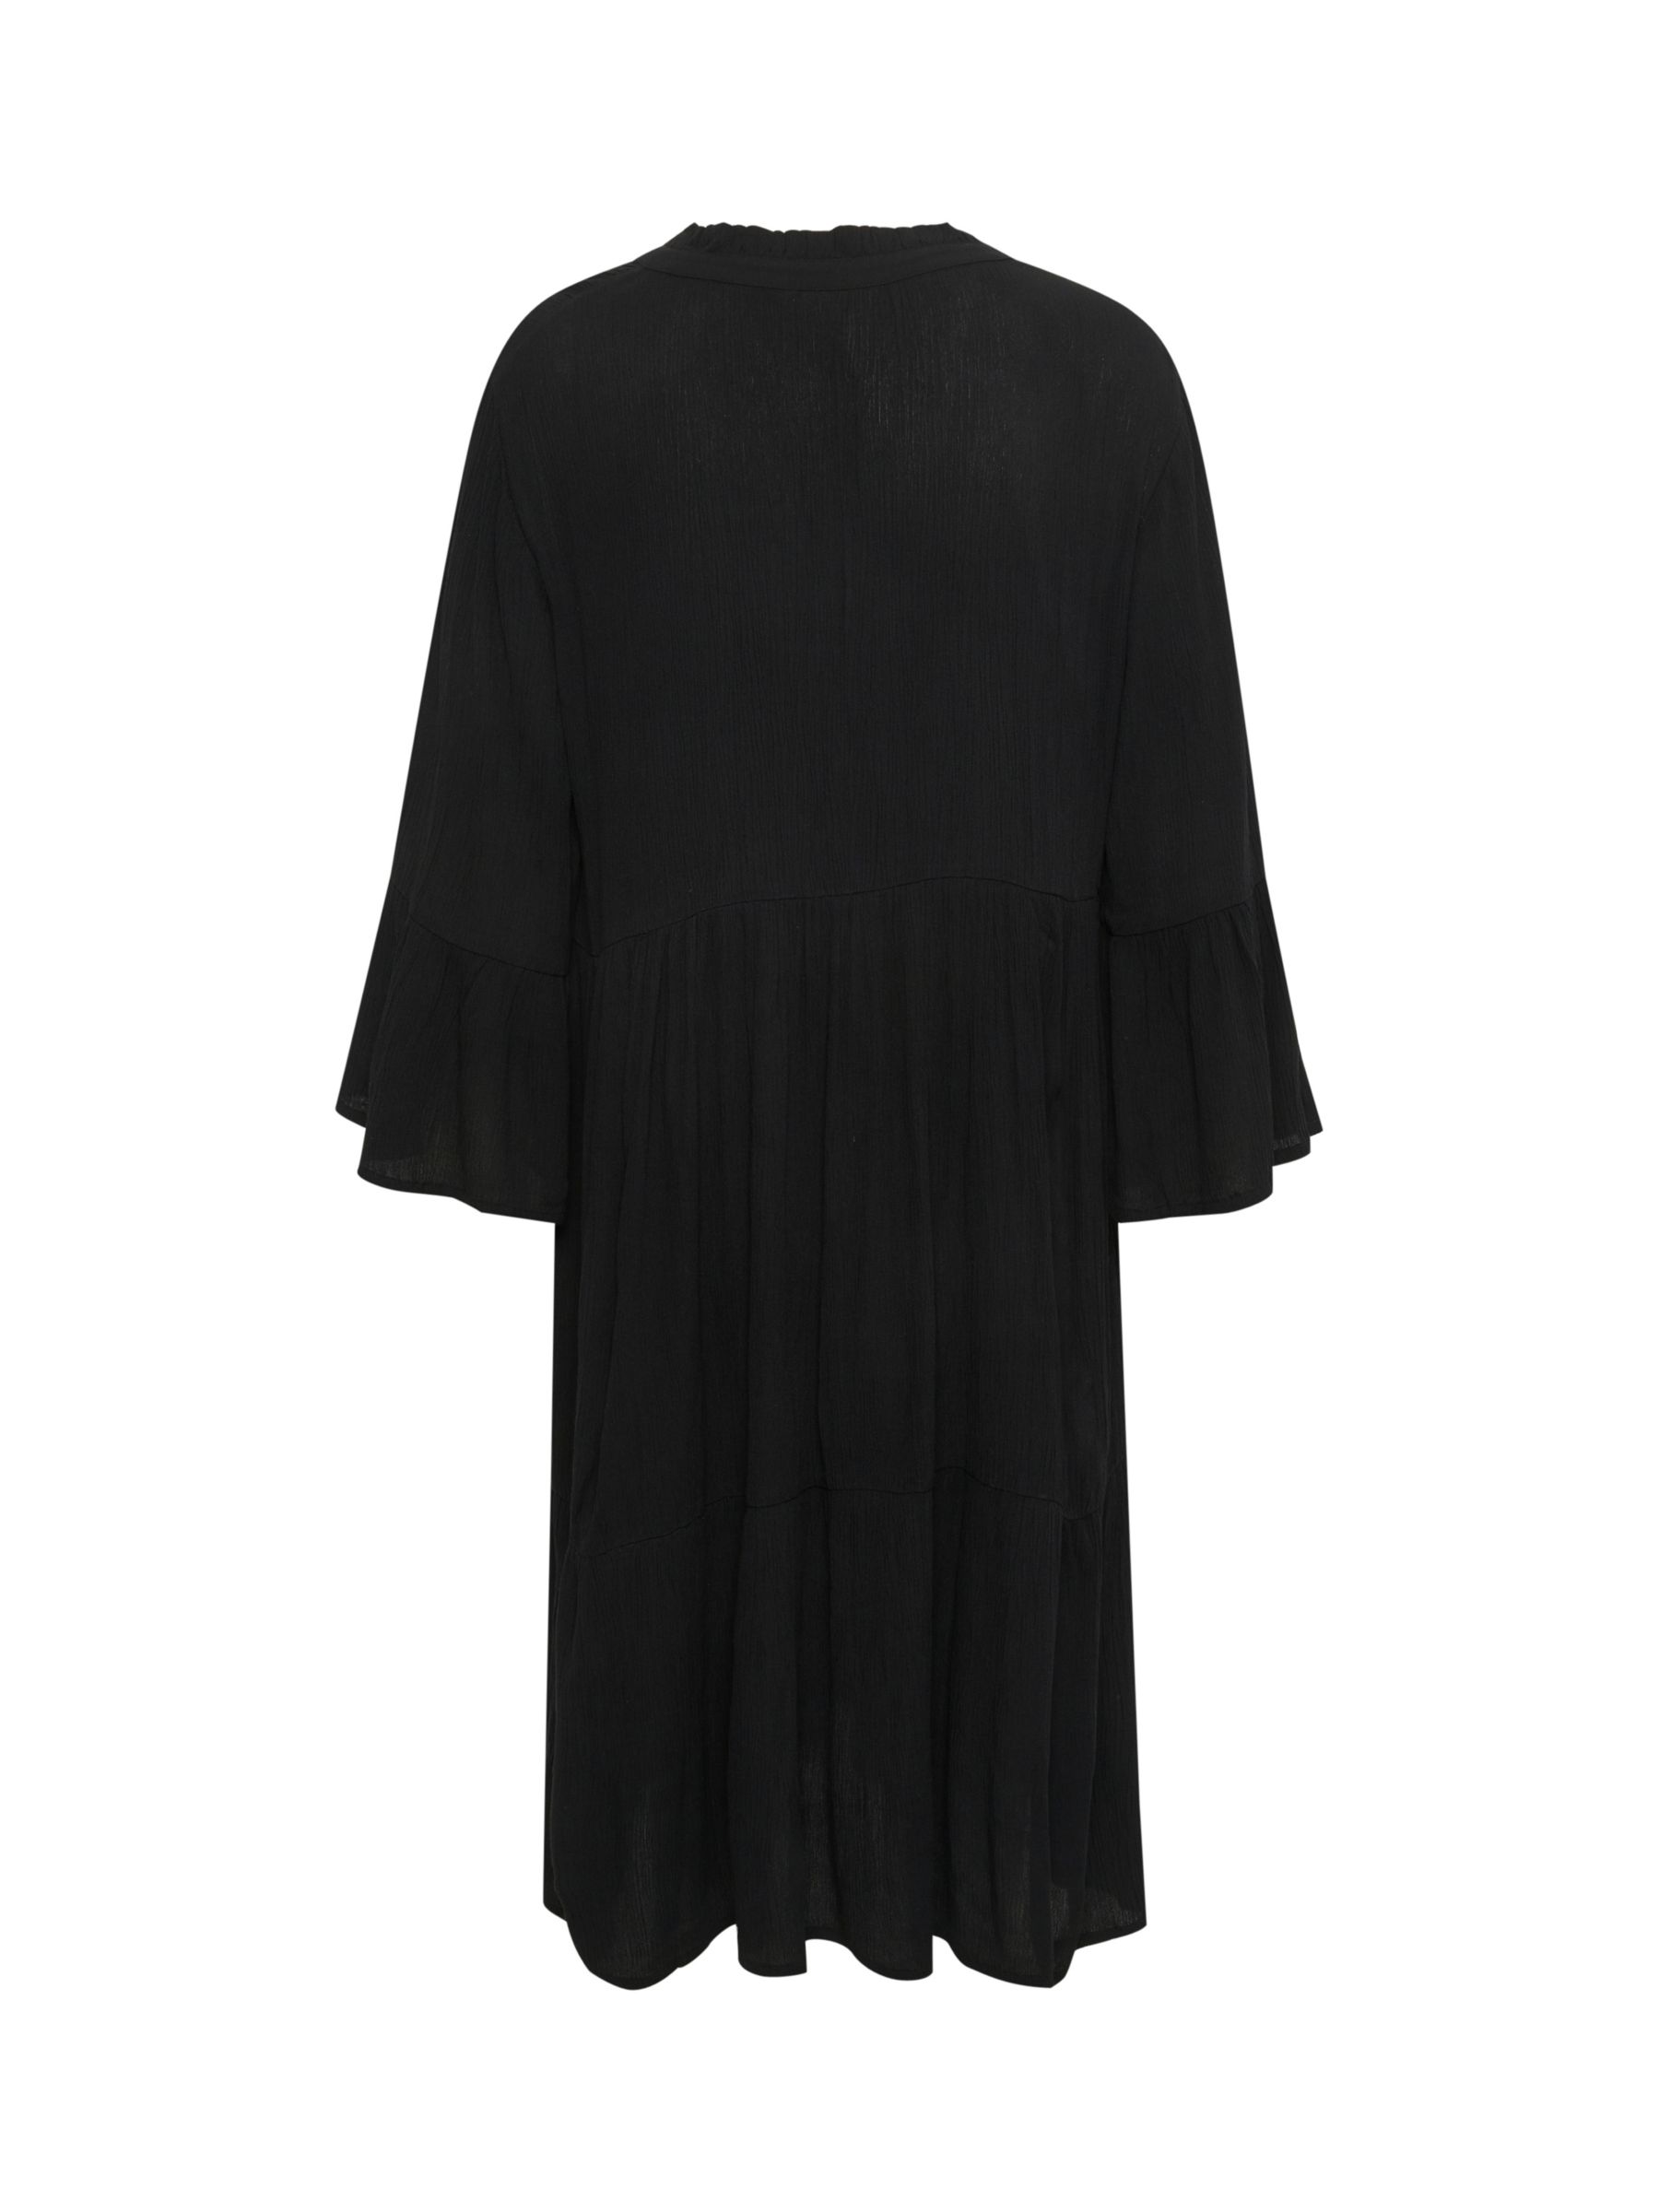 KAFFE Marianah A-Shape Knee Length Dress, Black at John Lewis & Partners